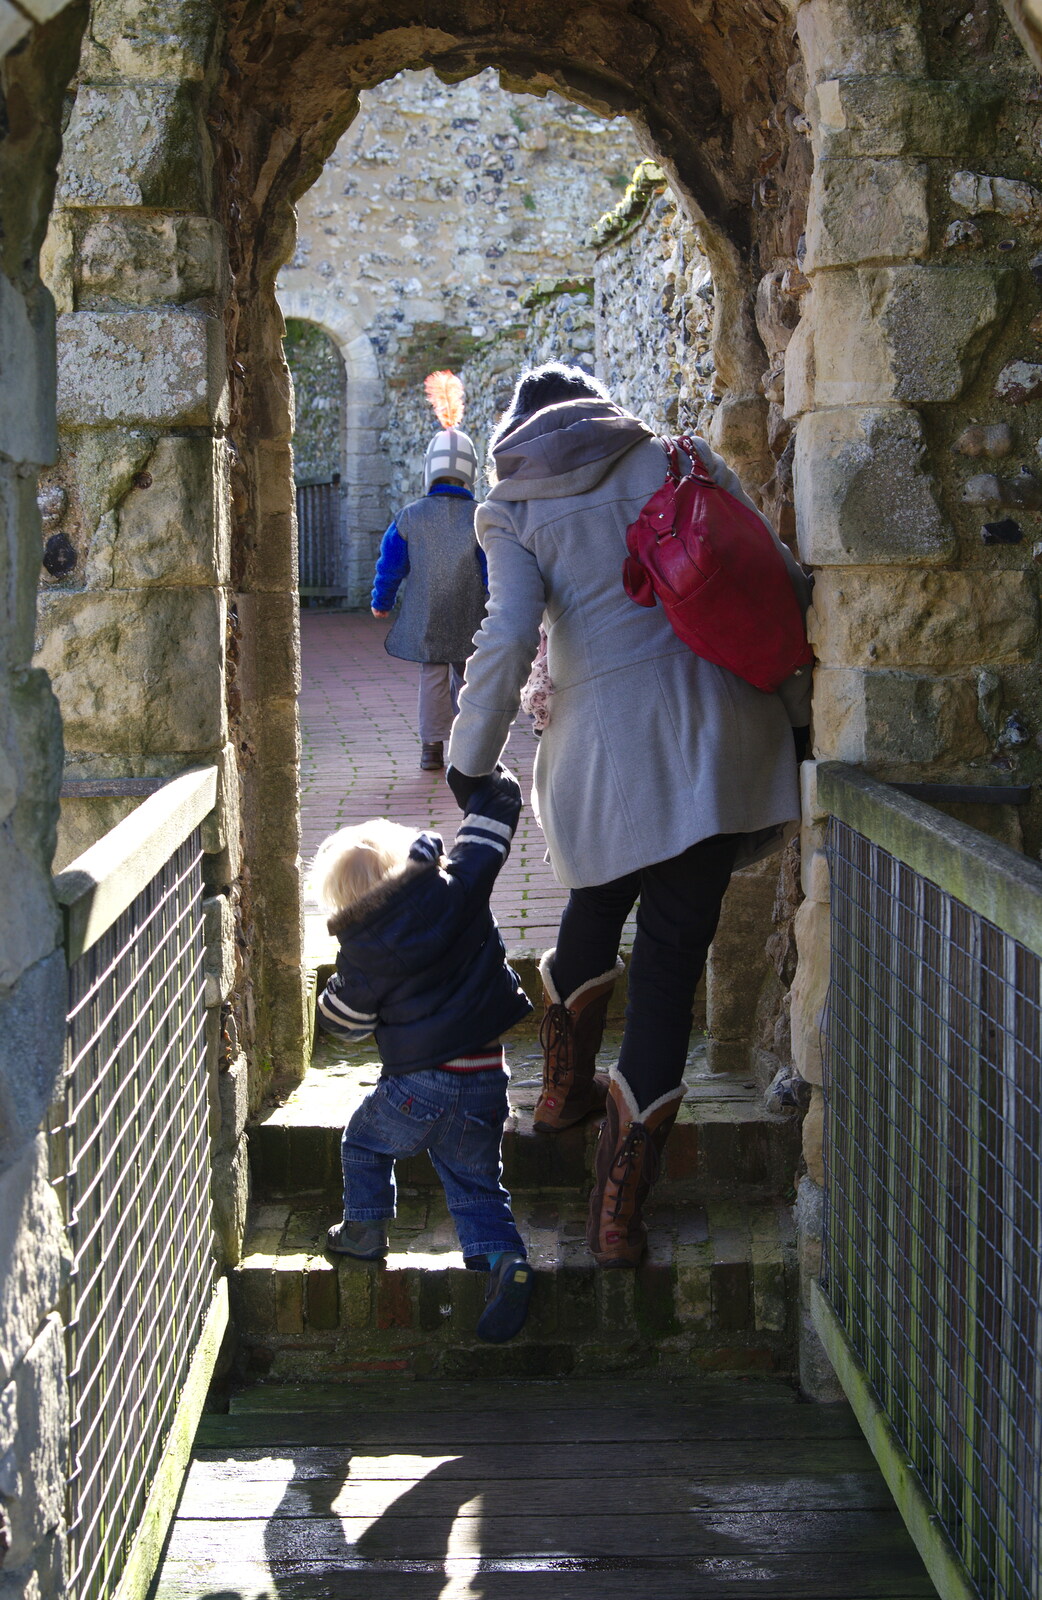 Isobel helps Harry up some steps from A Trip to Framlingham Castle, Framlingham, Suffolk - 16th February 2014